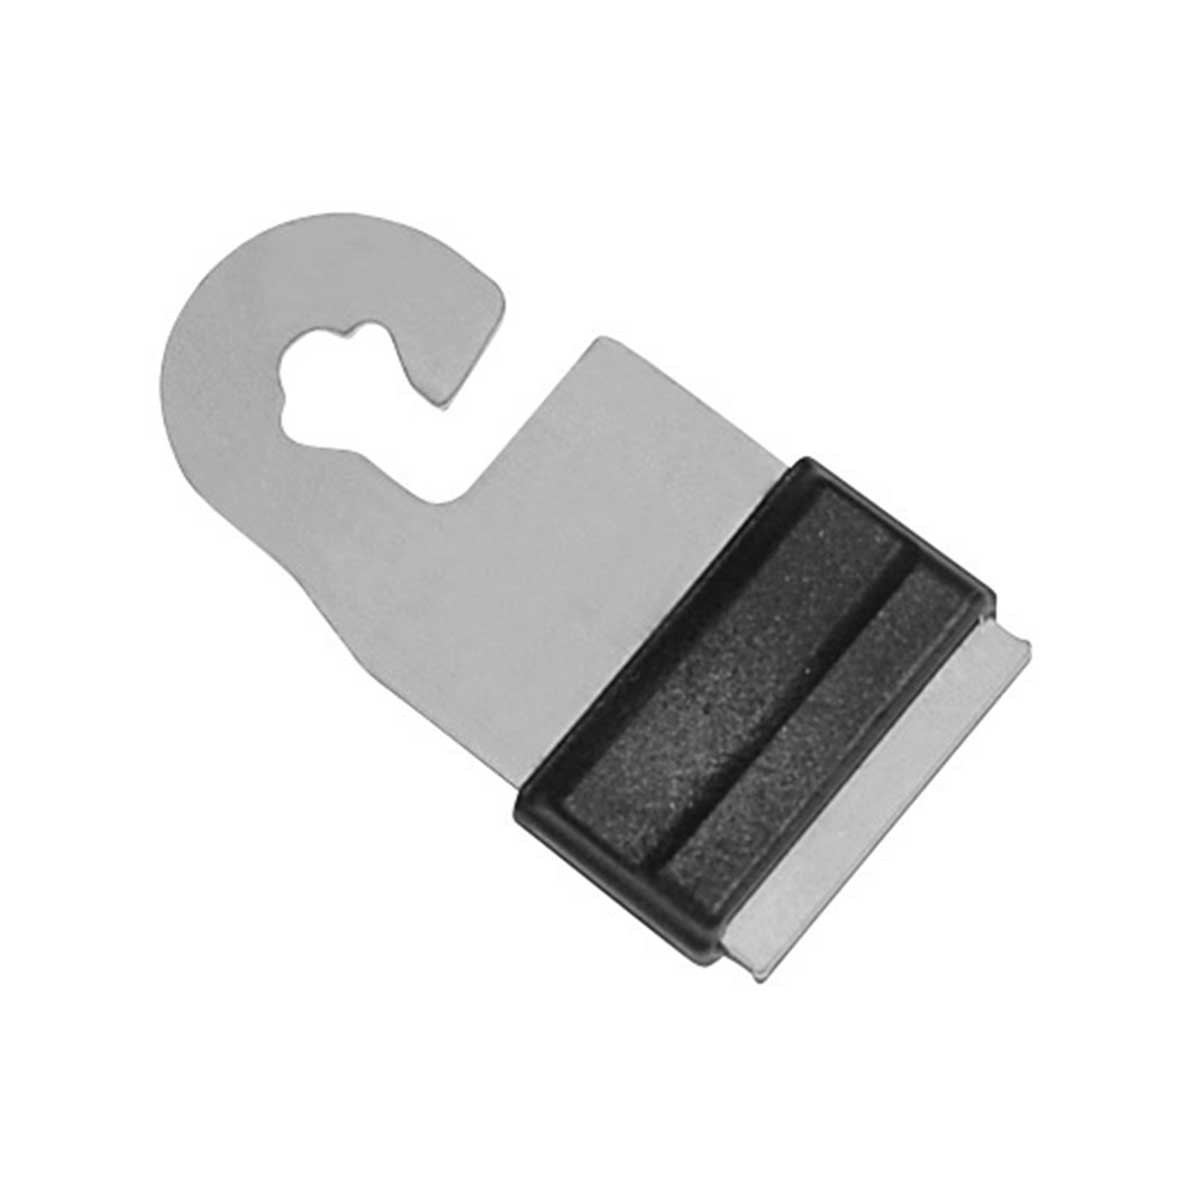 4x Litzclip-band för koppling av grindhandtag för grindhandtag 10-20 mm